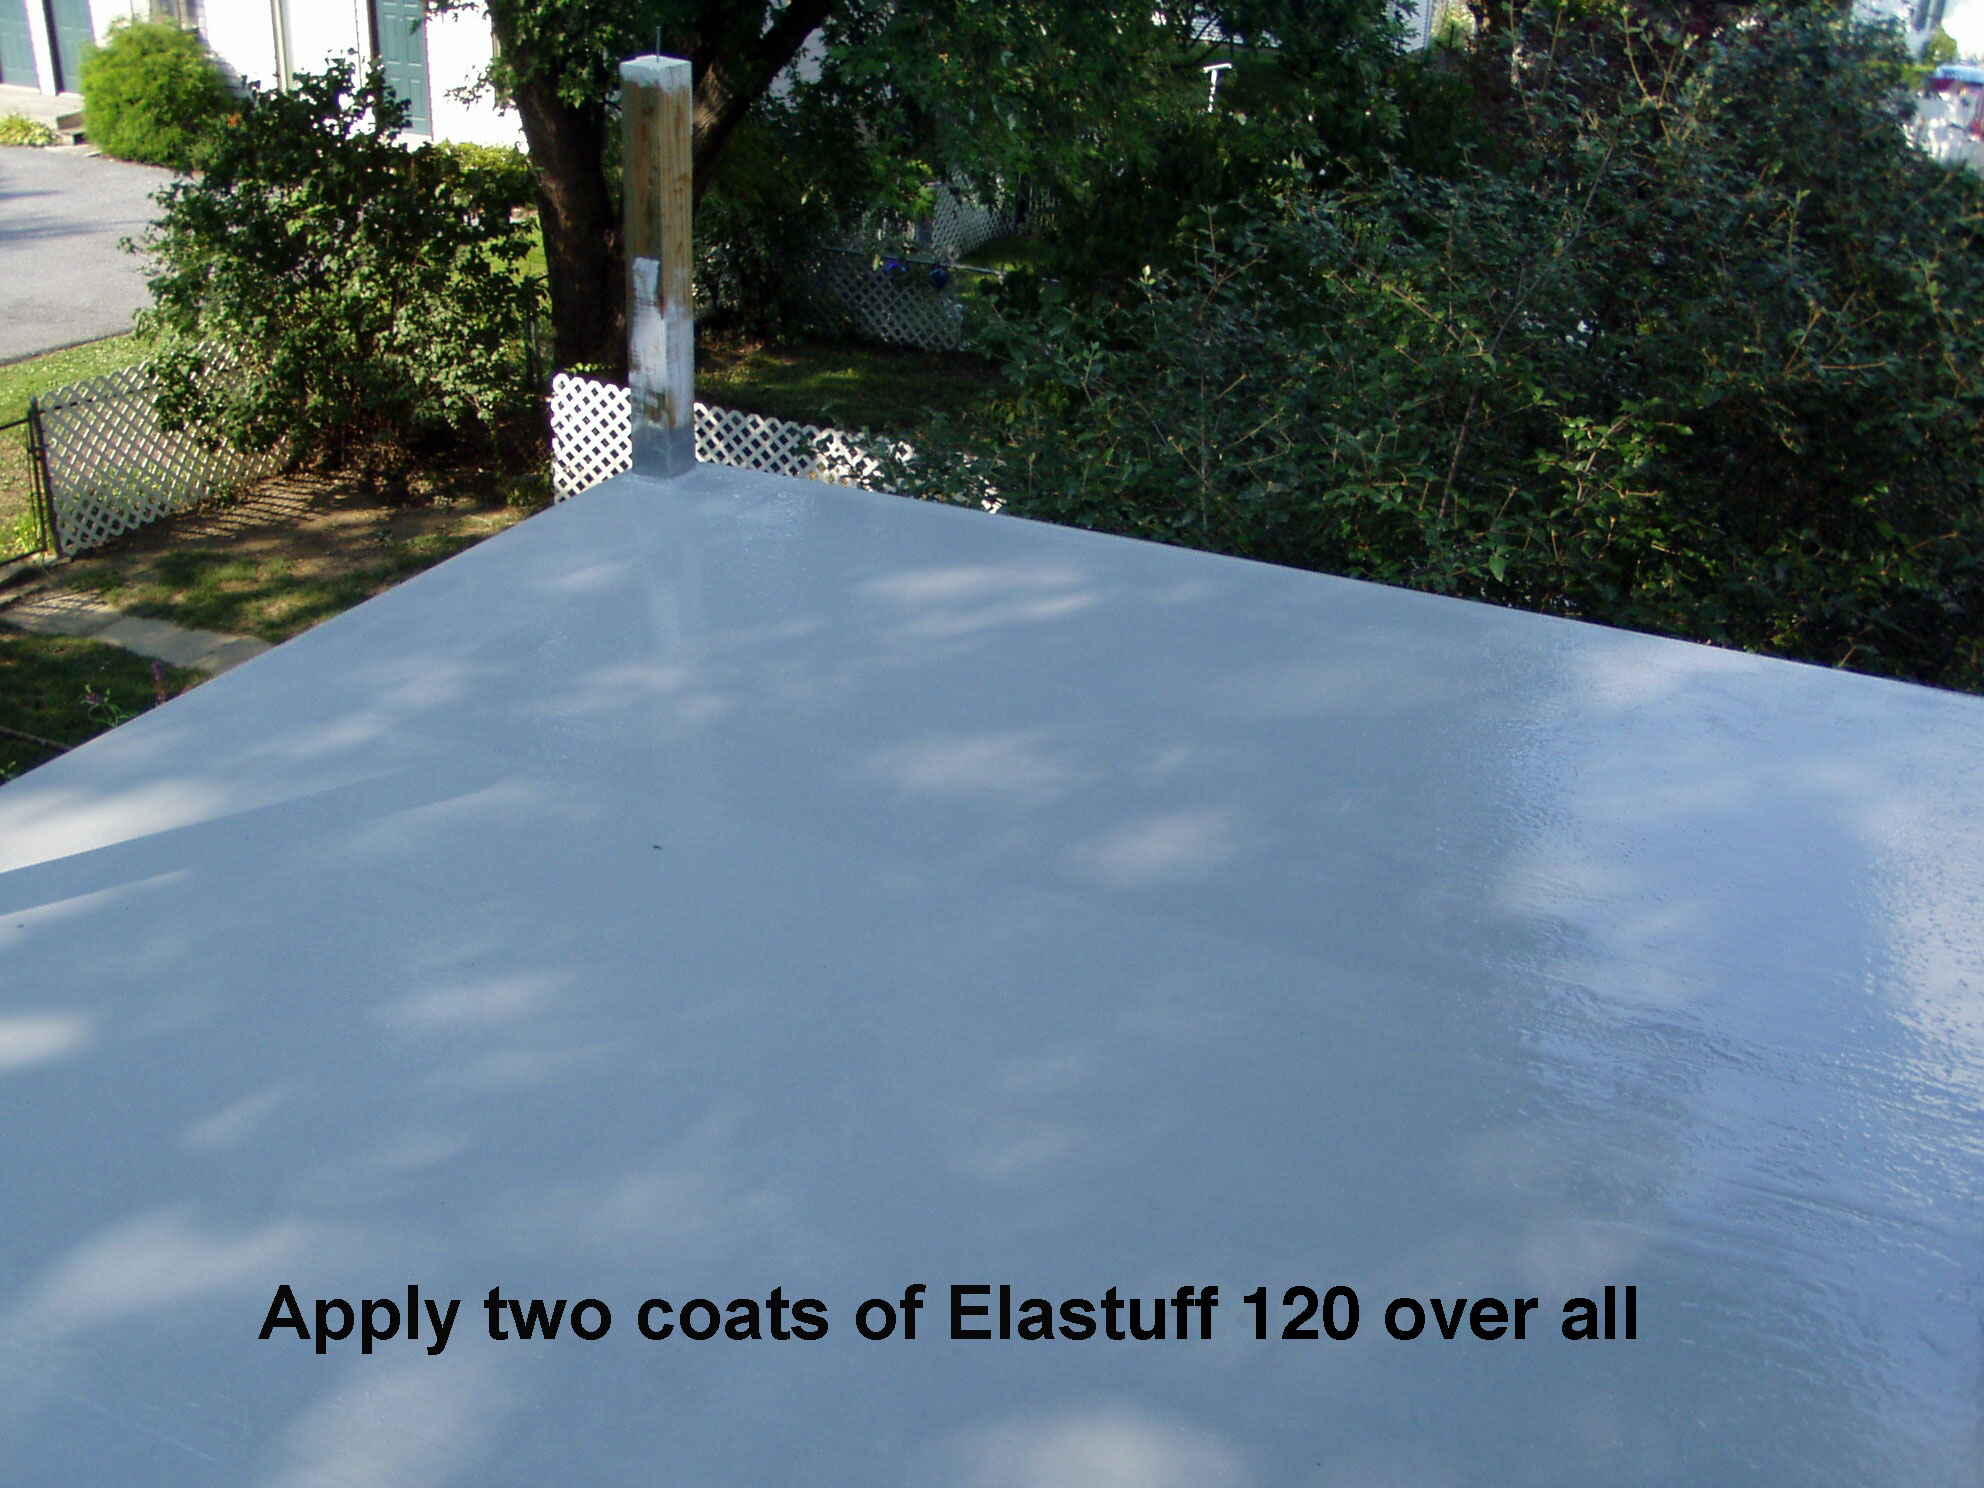 2 coats of Elastuff 120